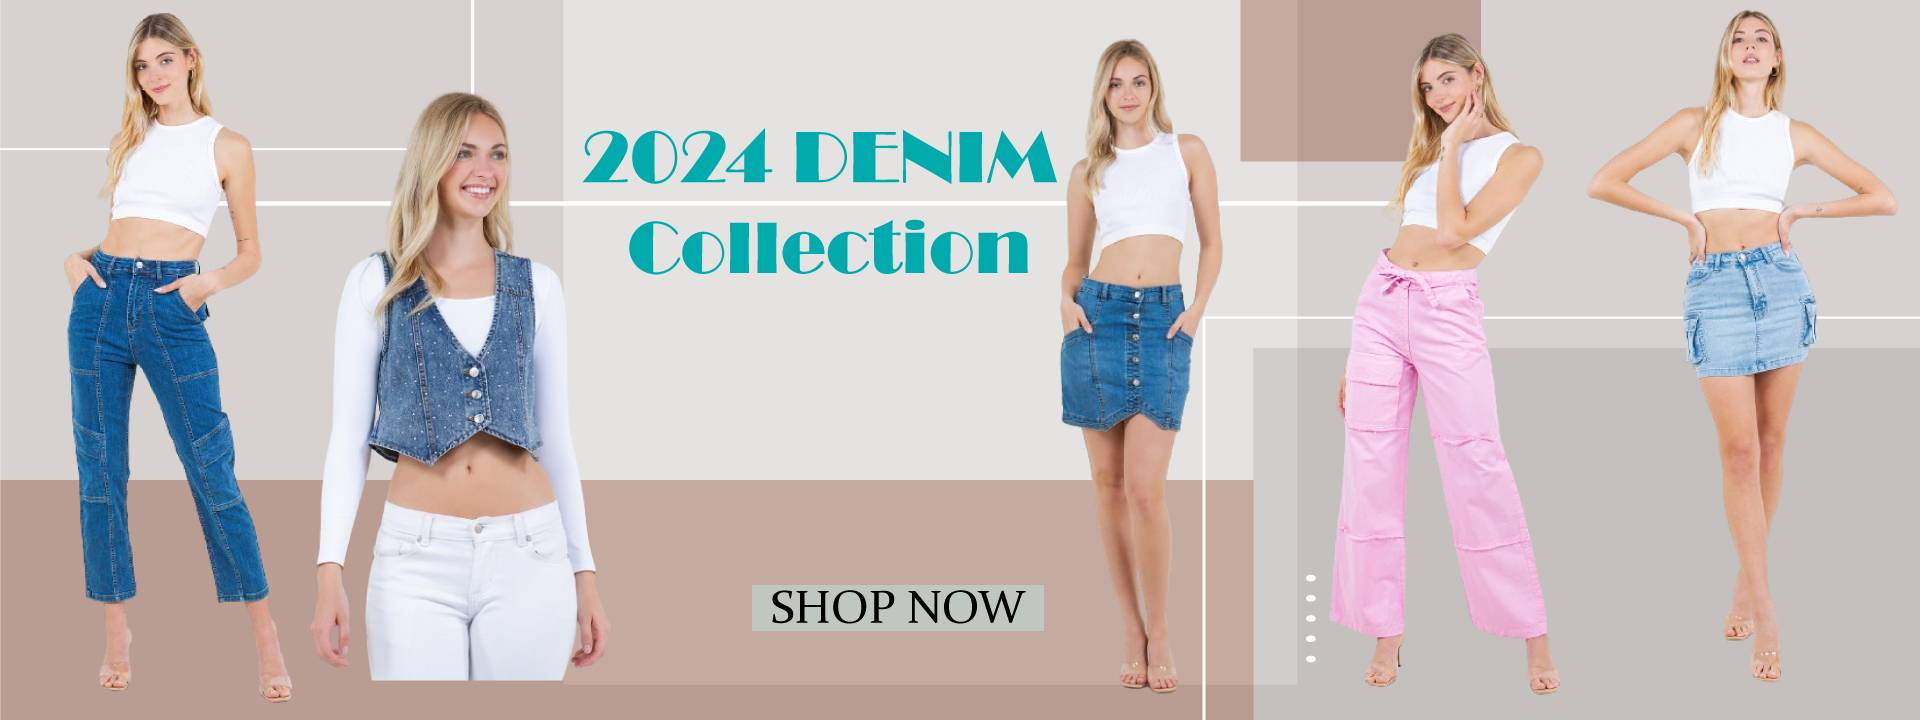 2024 Denim Collection